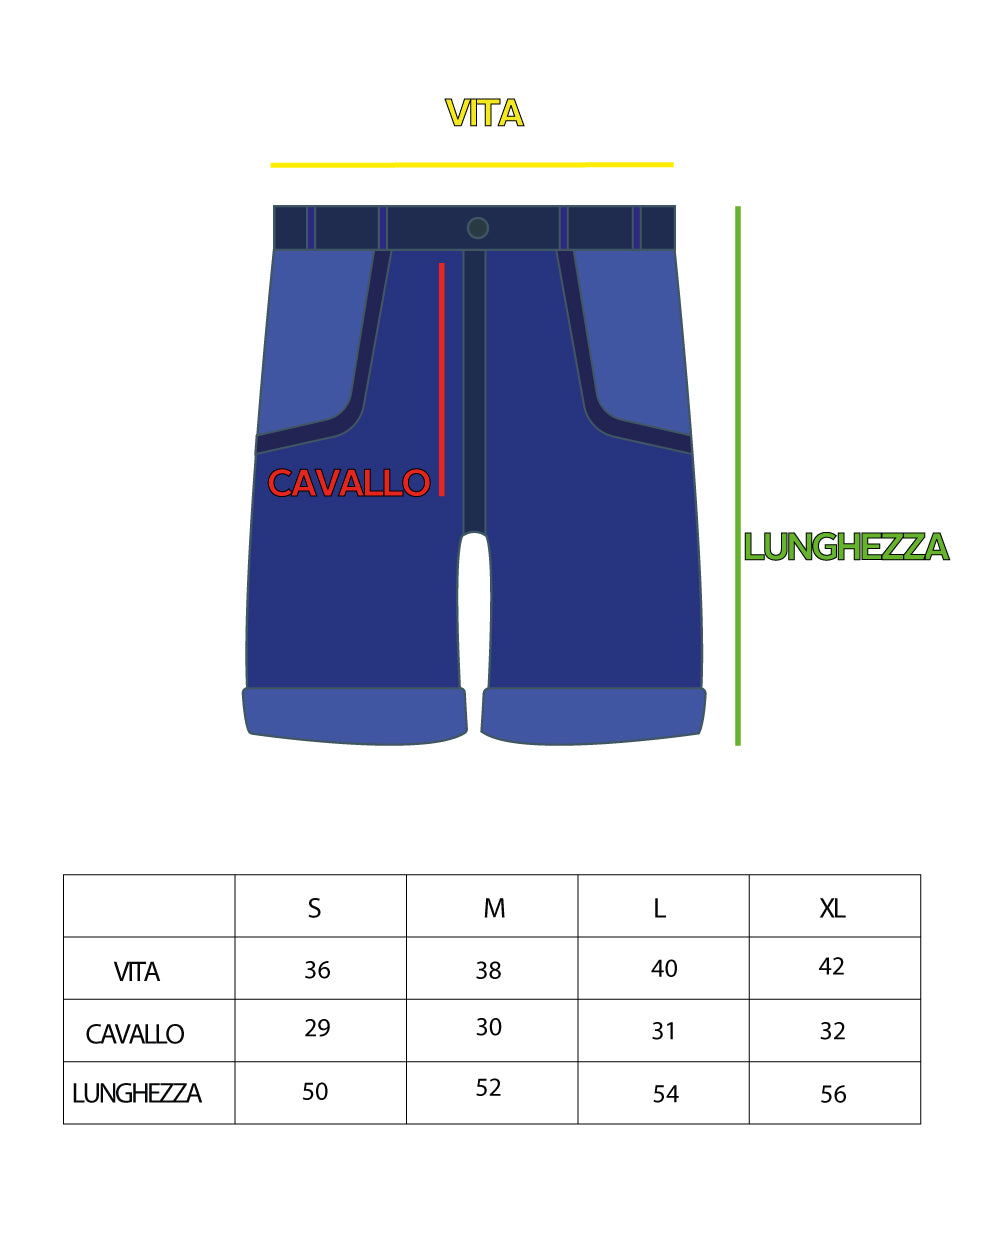 Bermuda Men's Short Linen Shorts with Elongated Button Blue GIOSAL-PC1756A